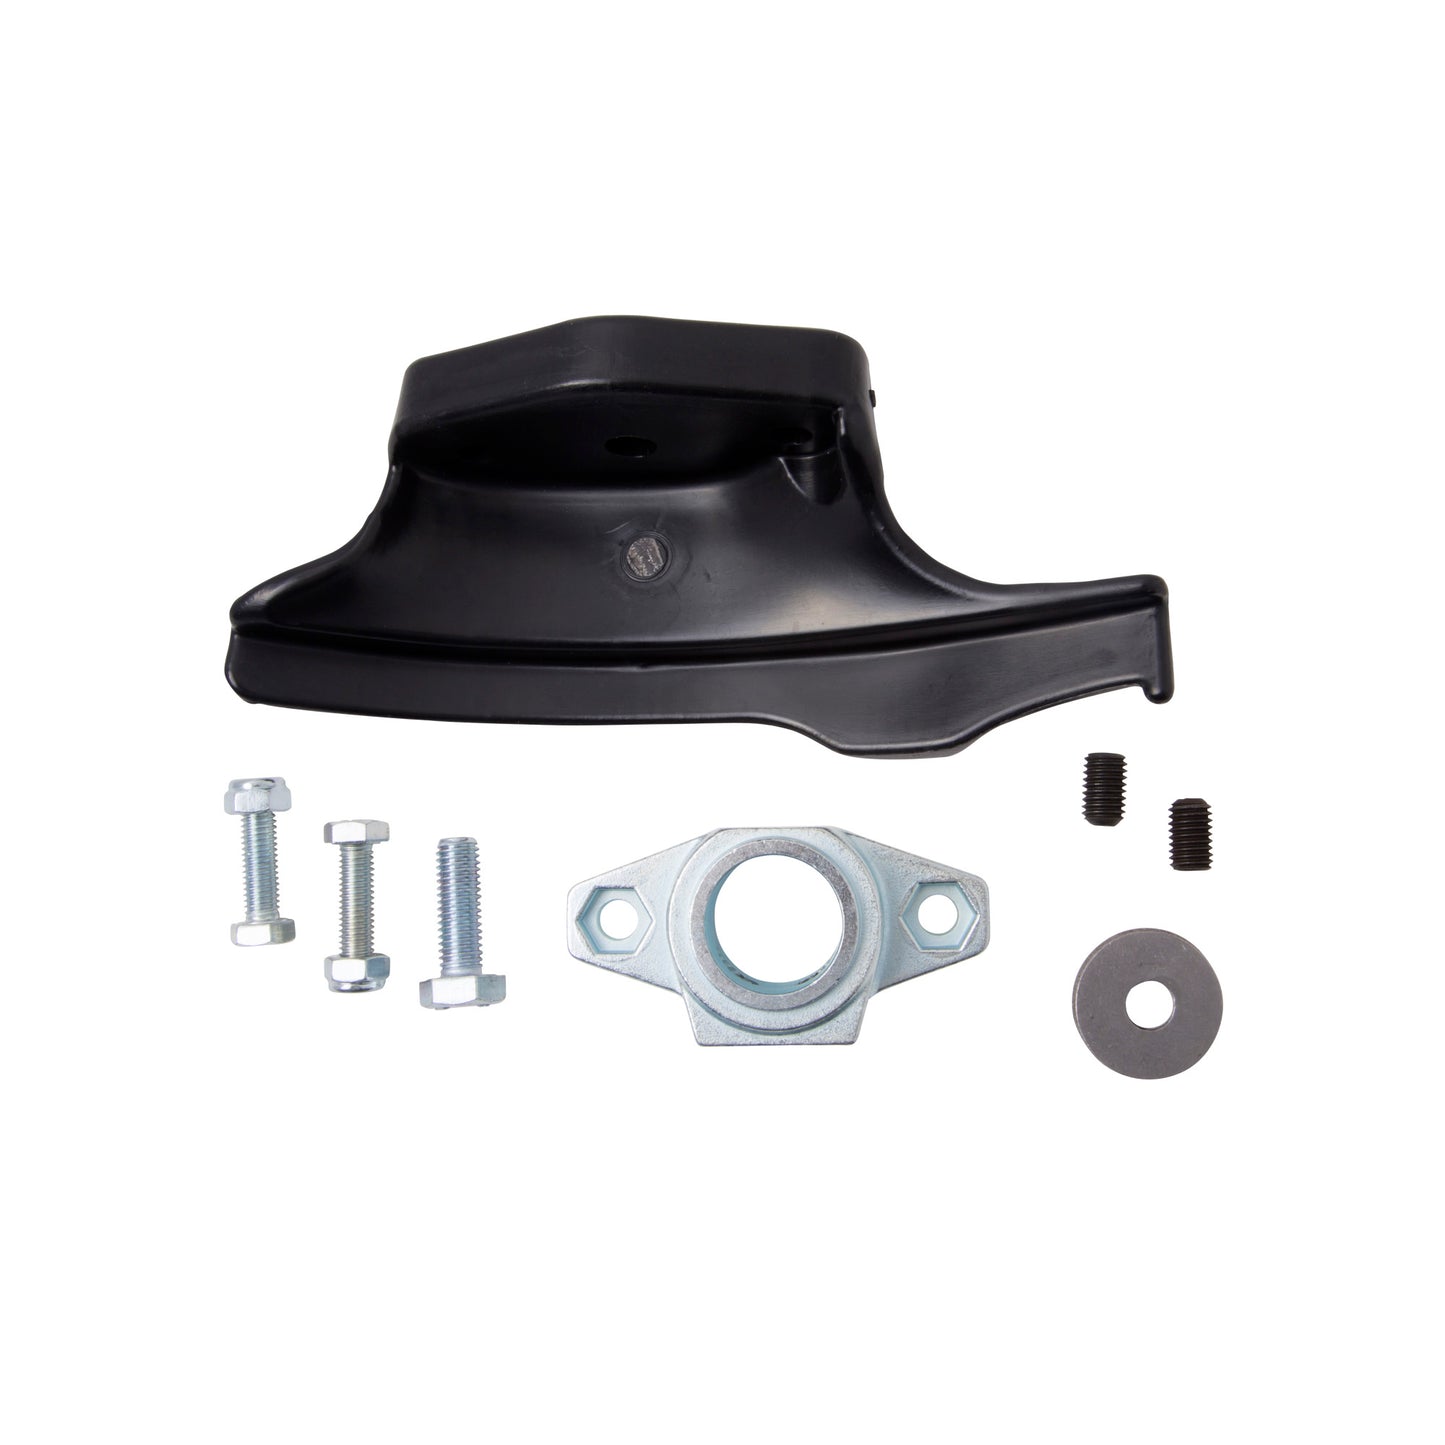 Replacement Nylon Duckhead Mount / Demount Head Kit for Tire Changers